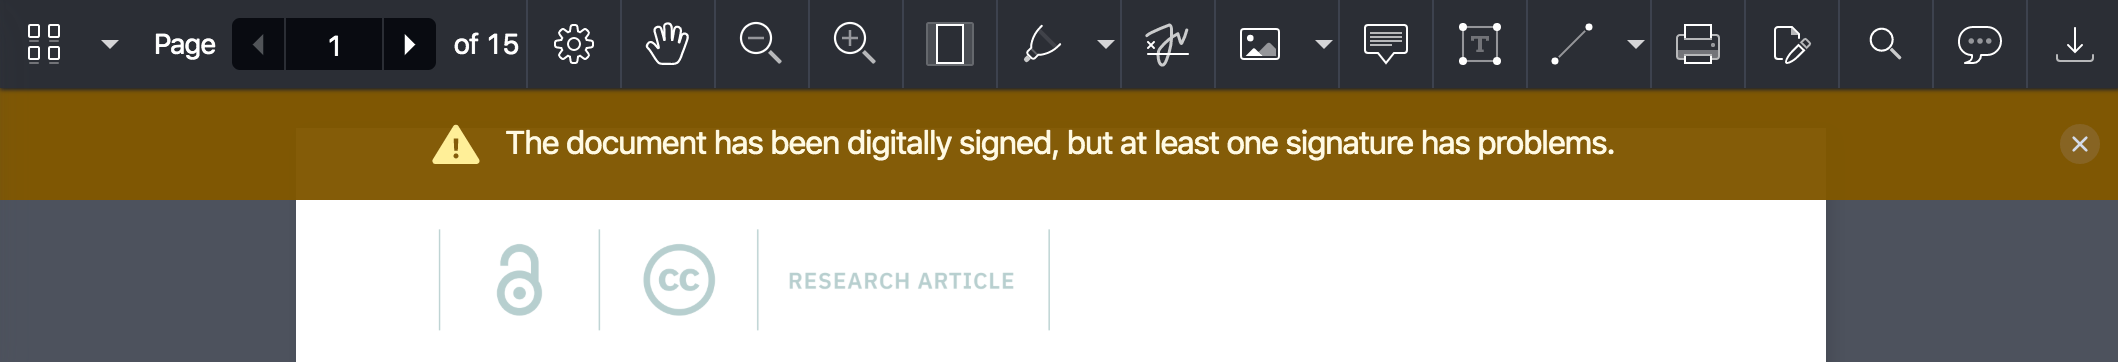 digital signatures validation status bar showing signature with problems